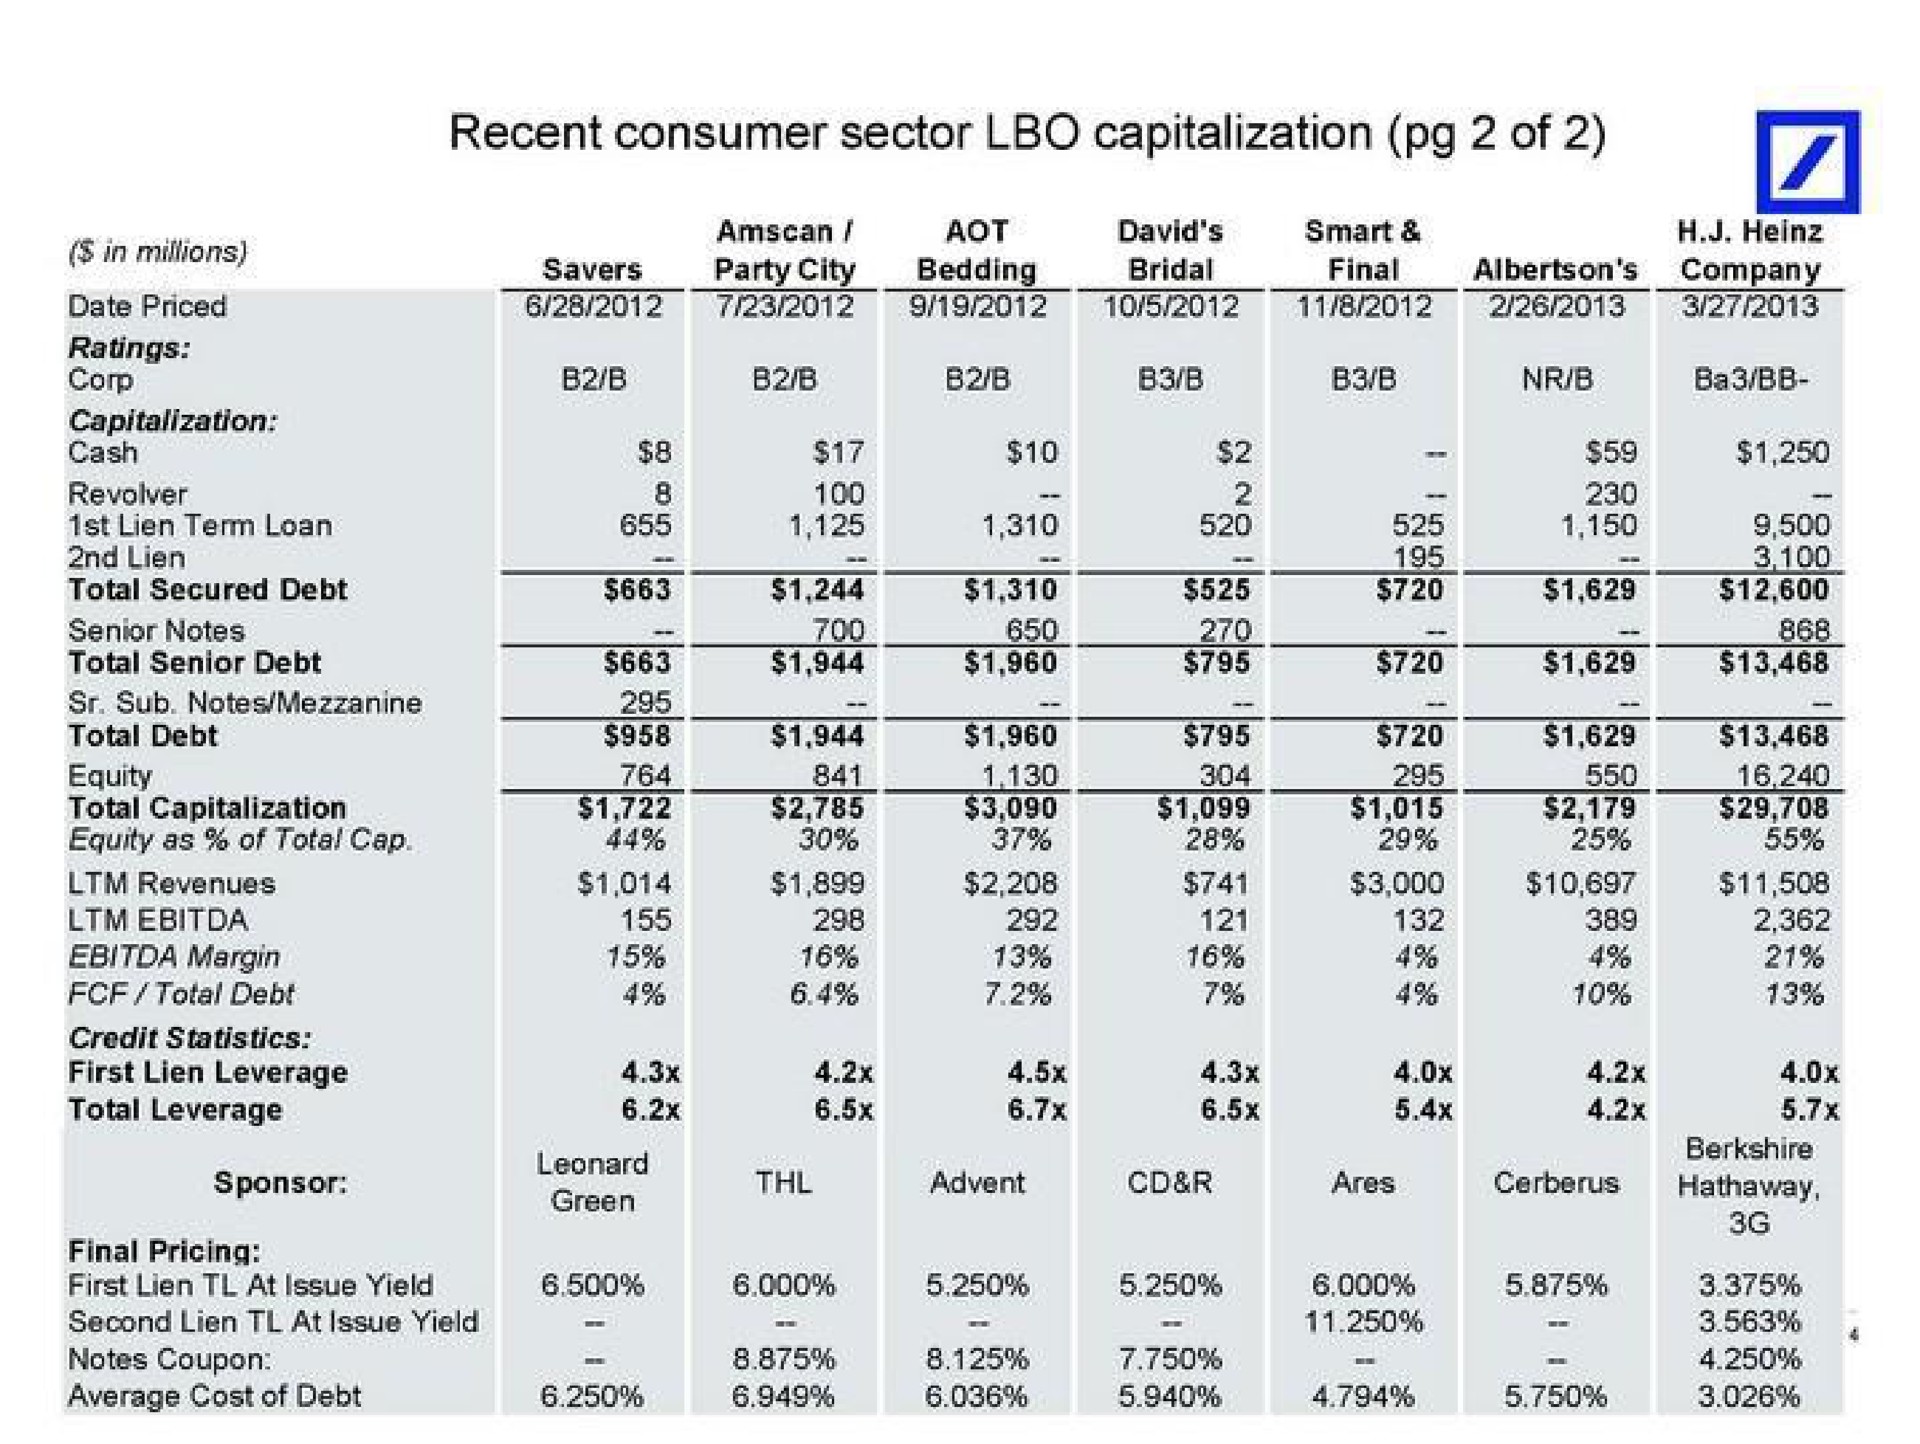 recent consumer sector capitalization of ares | Deutsche Bank